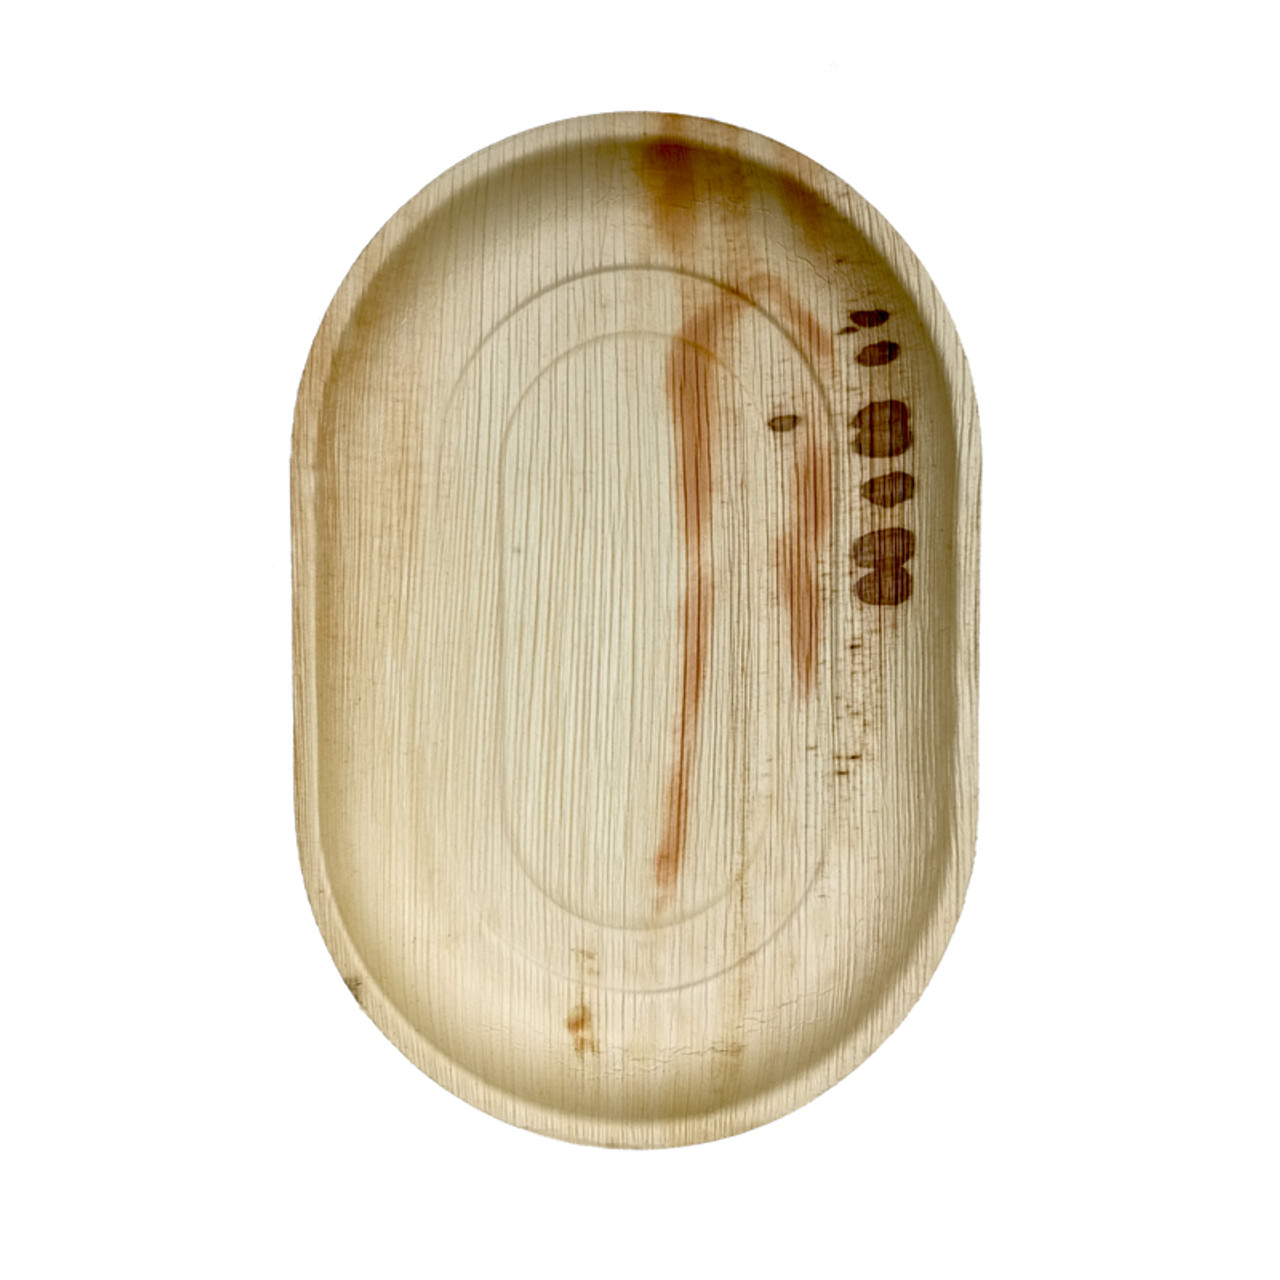 Order a Sample - Oval Palm Leaf Plate L:17 x W:11.5 x H:1in